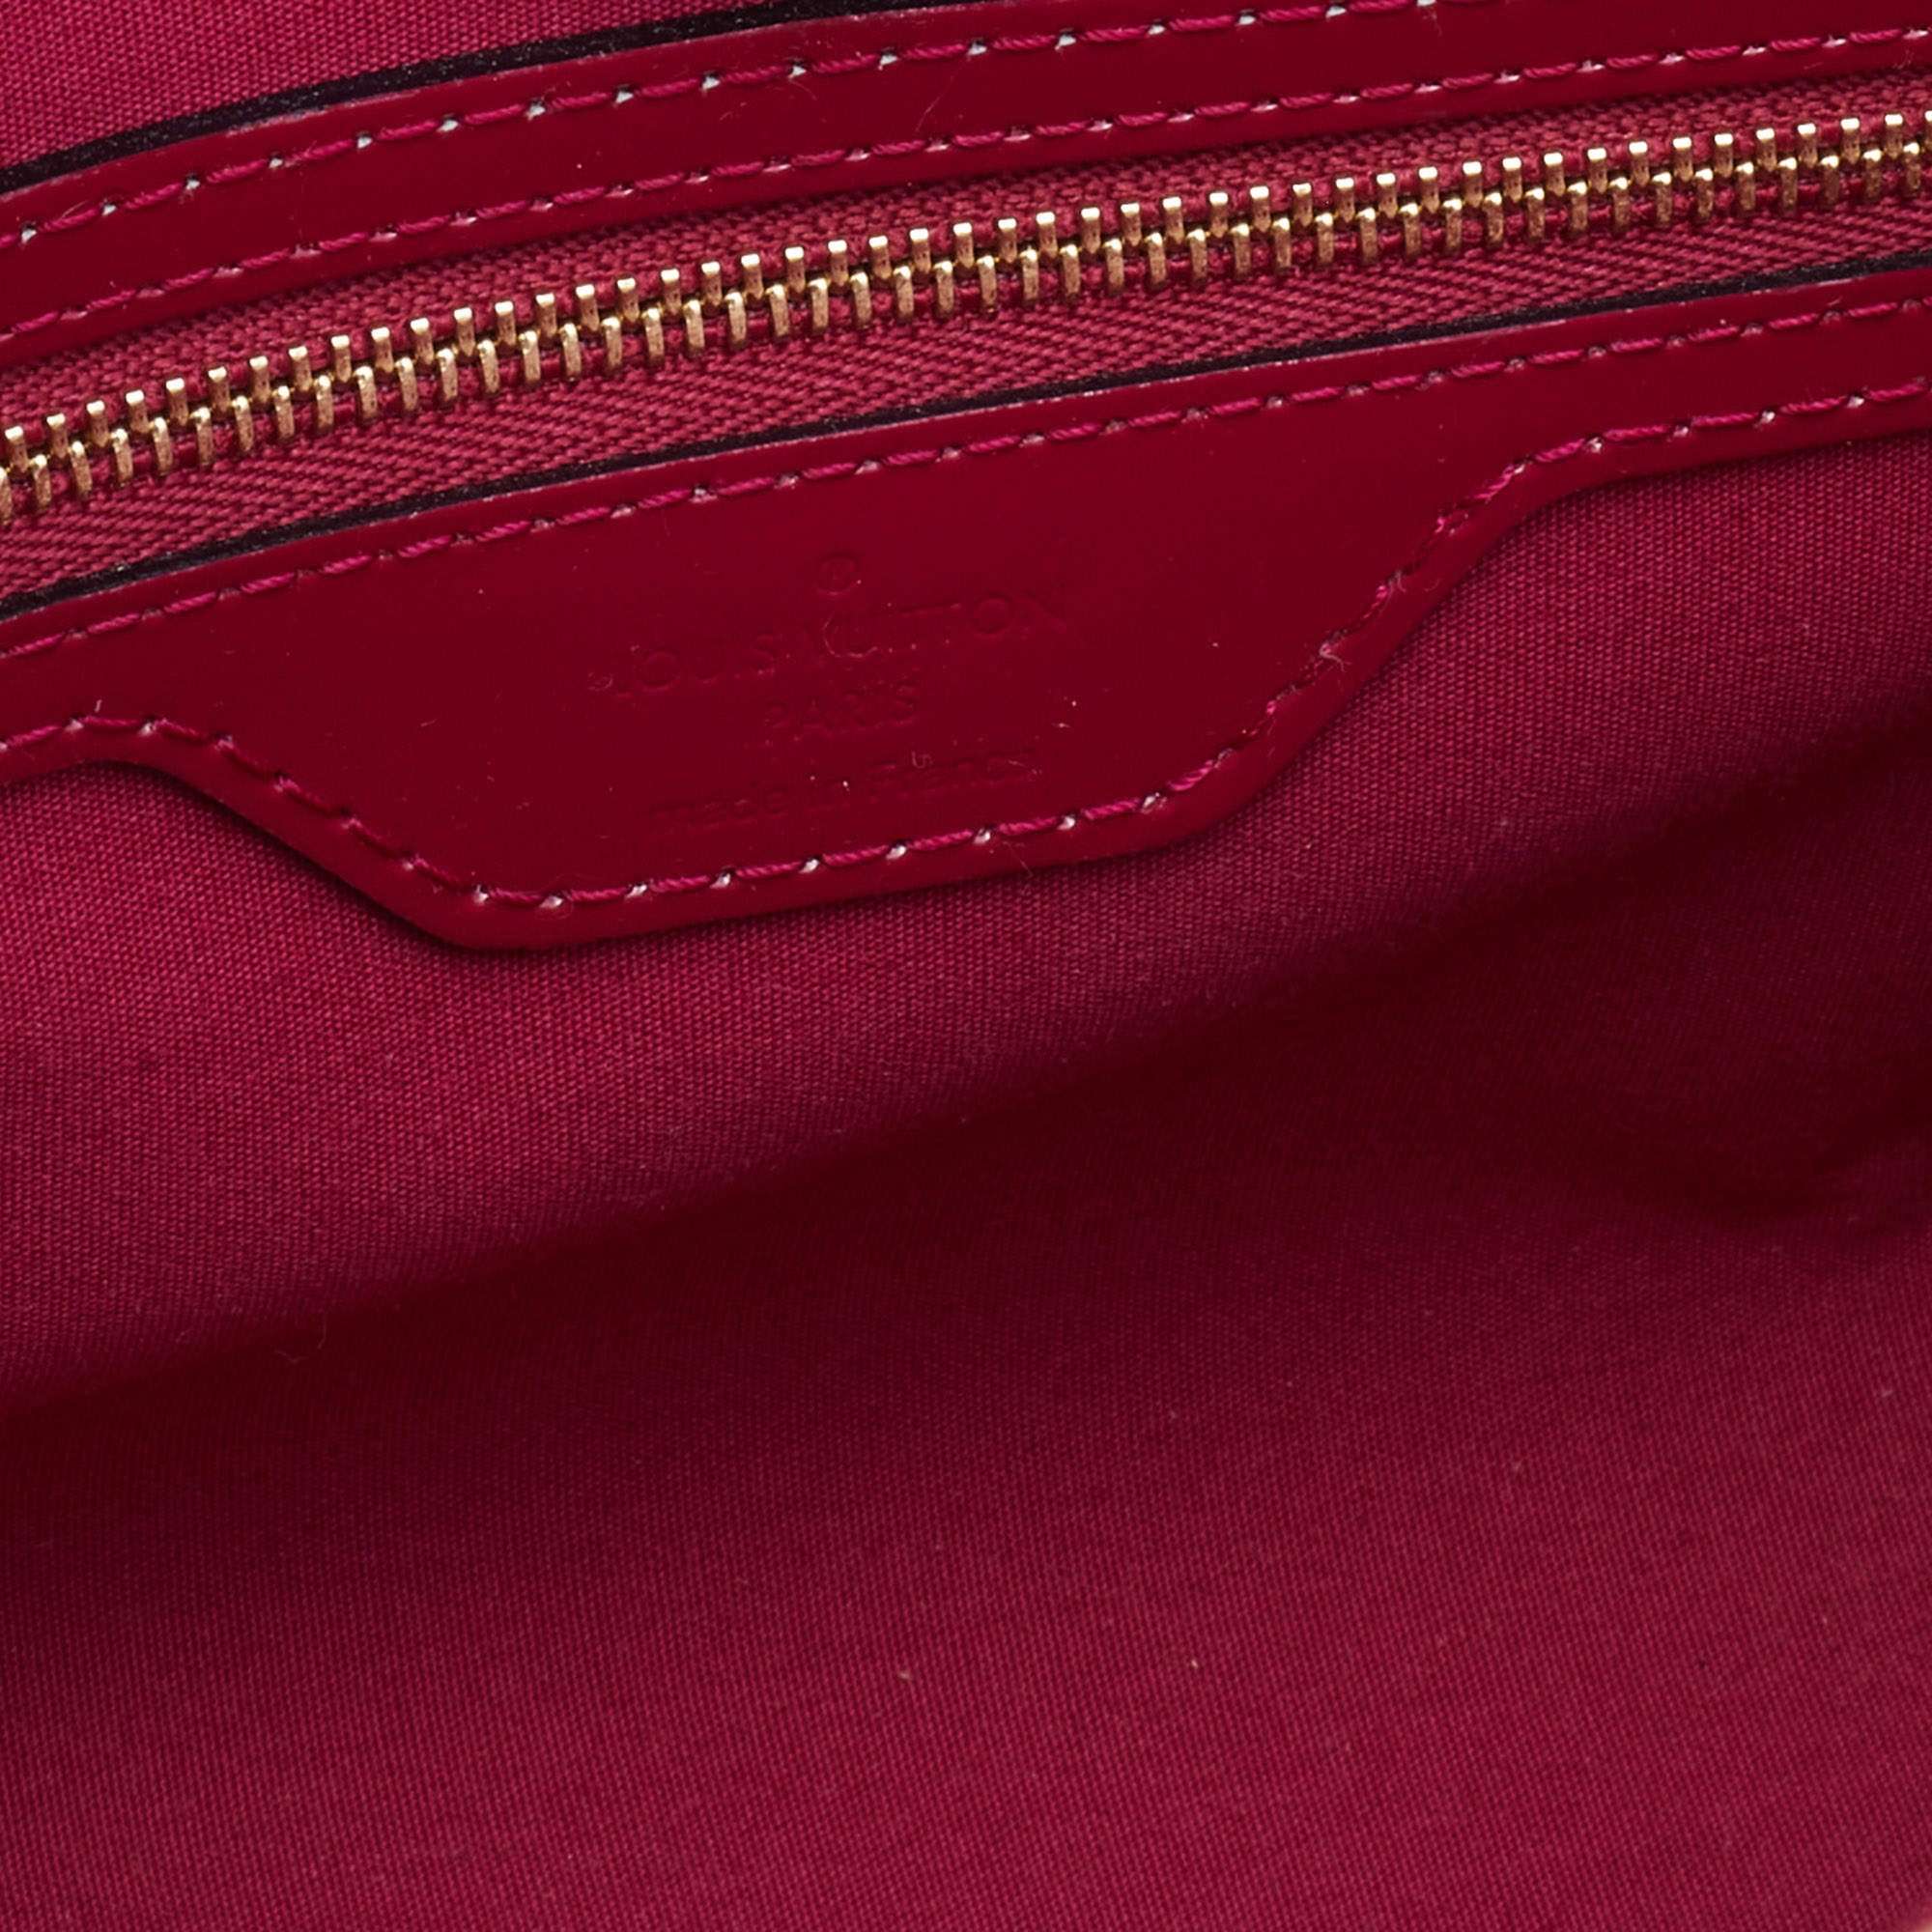 Louis Vuitton Catalina BB Rose Indien Monogram Vernis Leather Handbag –  Mills Jewelers & Loan